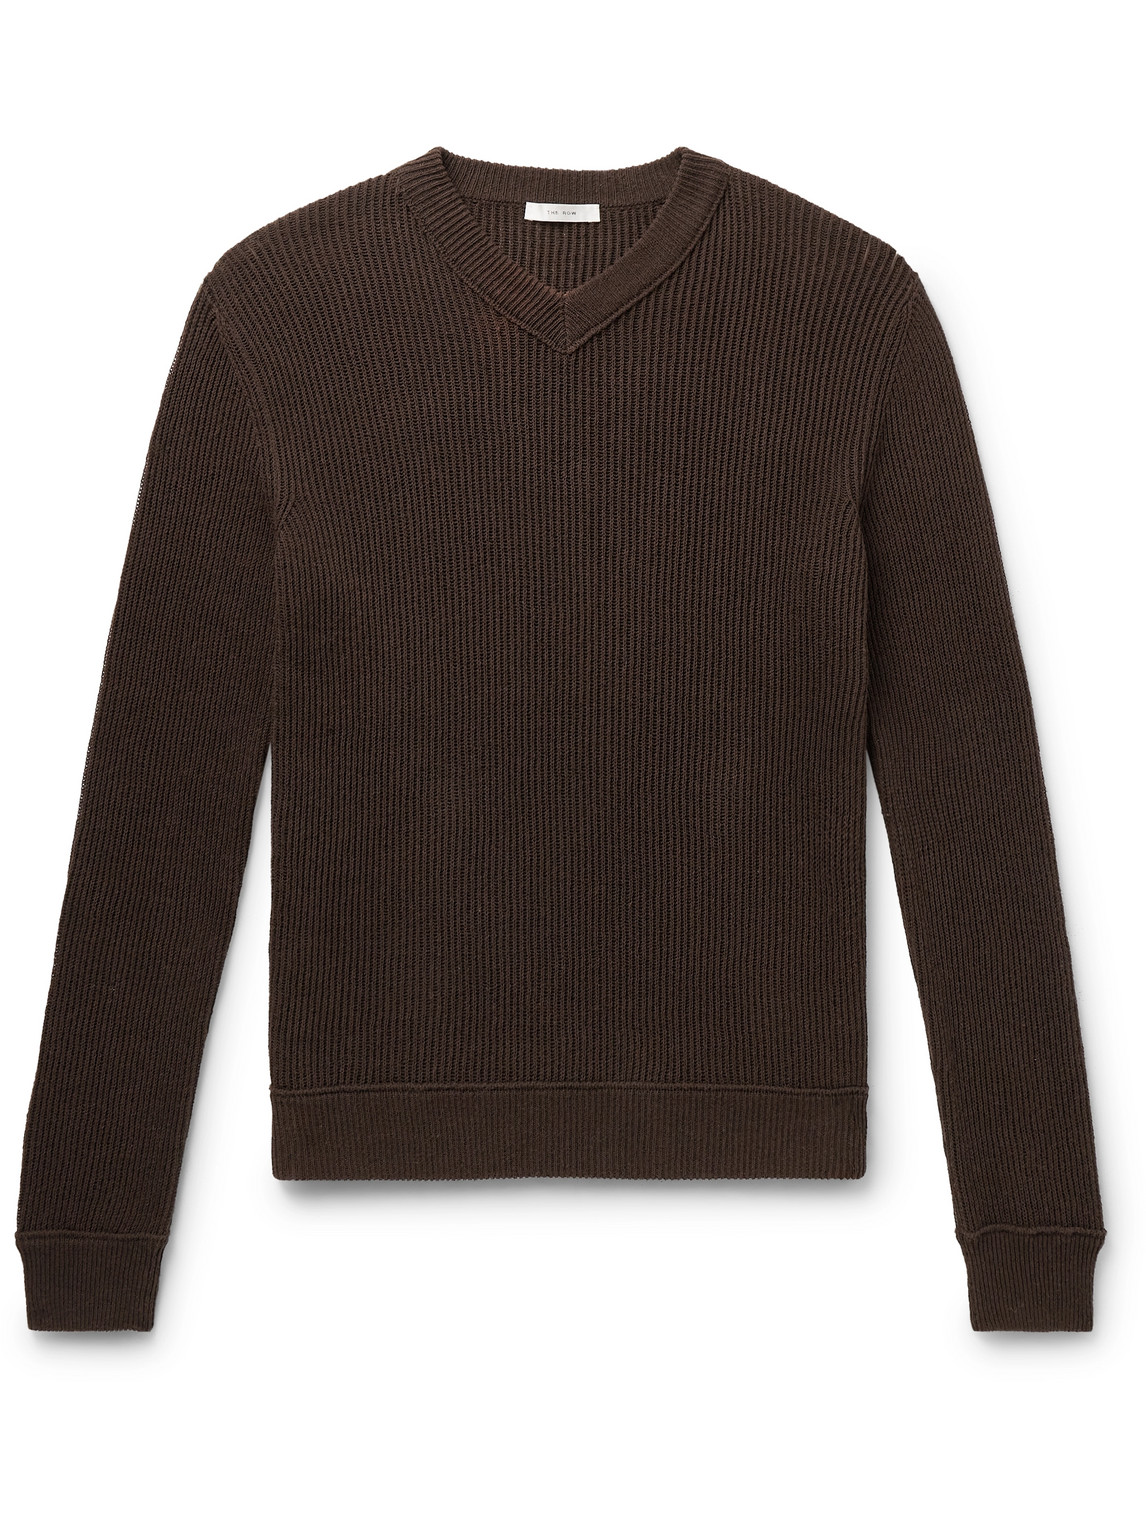 The Row - Corbin Ribbed Cotton Sweater - Men - Brown - XXL von The Row